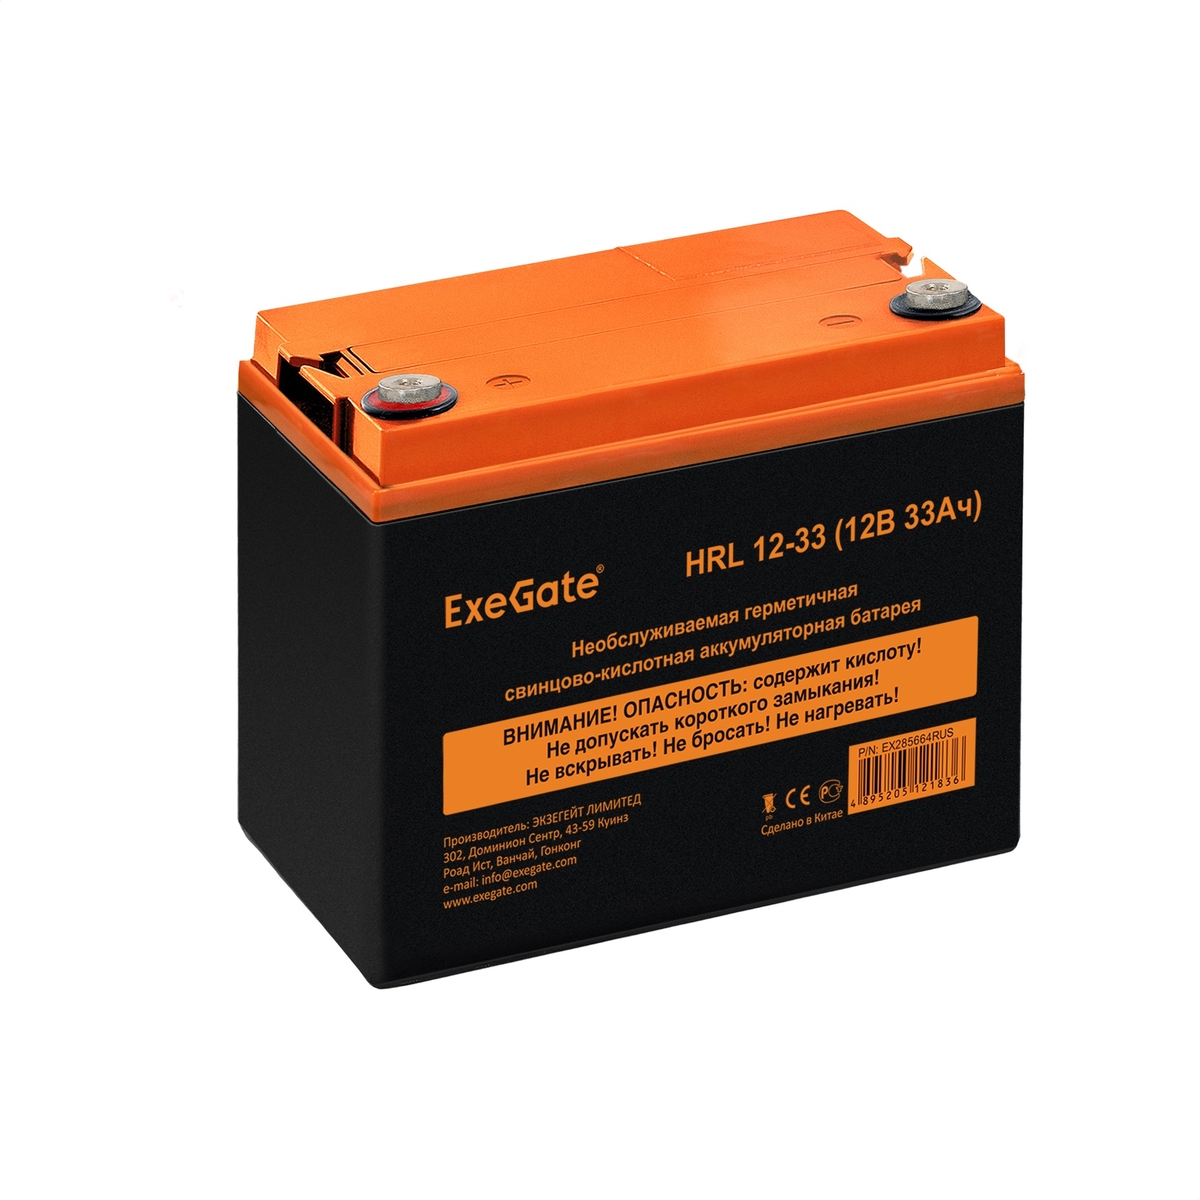 UPS set EX295995 + battery 33Ah EX285664 1 piece